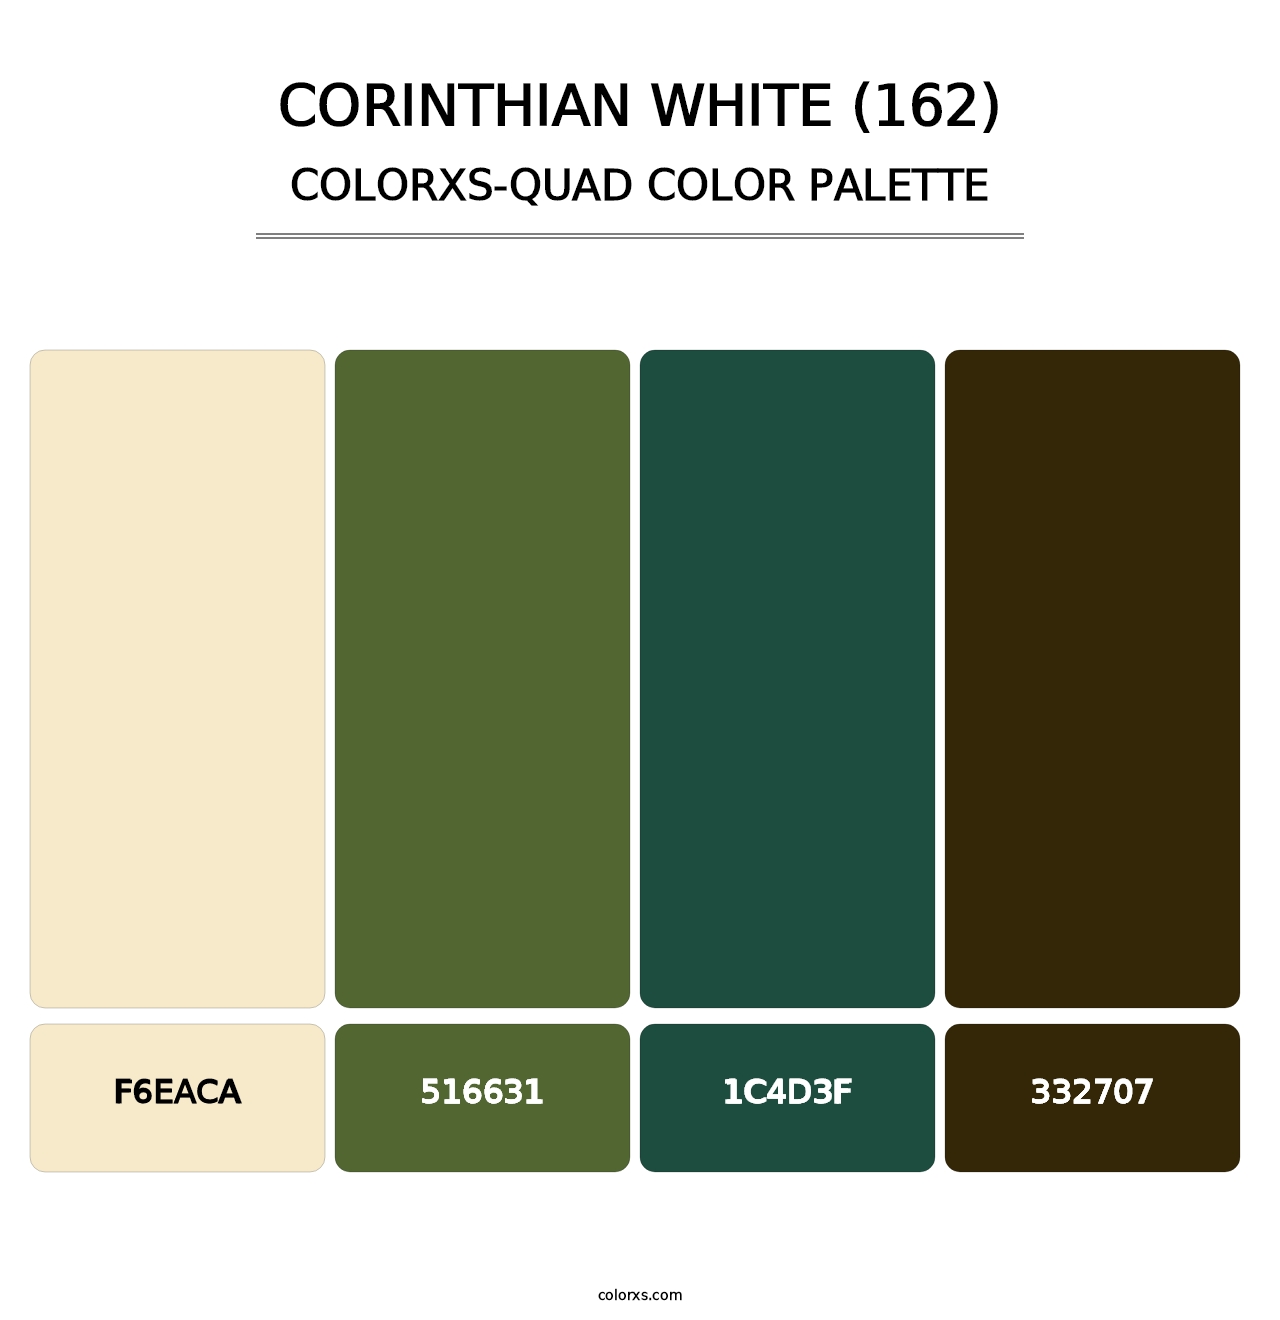 Corinthian White (162) - Colorxs Quad Palette